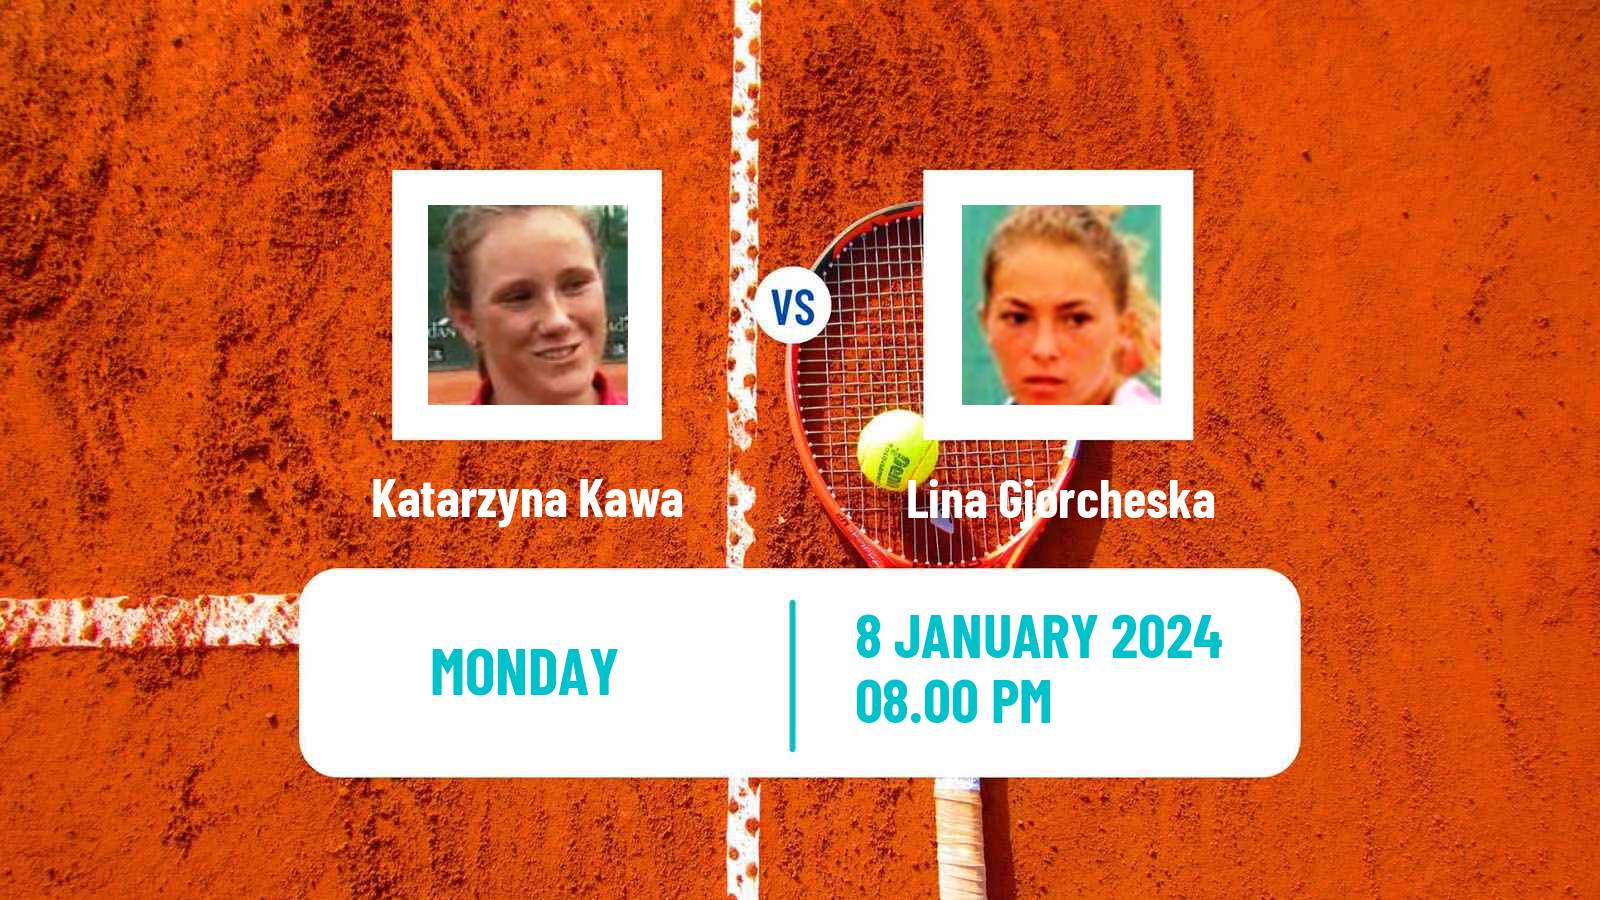 Tennis WTA Australian Open Katarzyna Kawa - Lina Gjorcheska